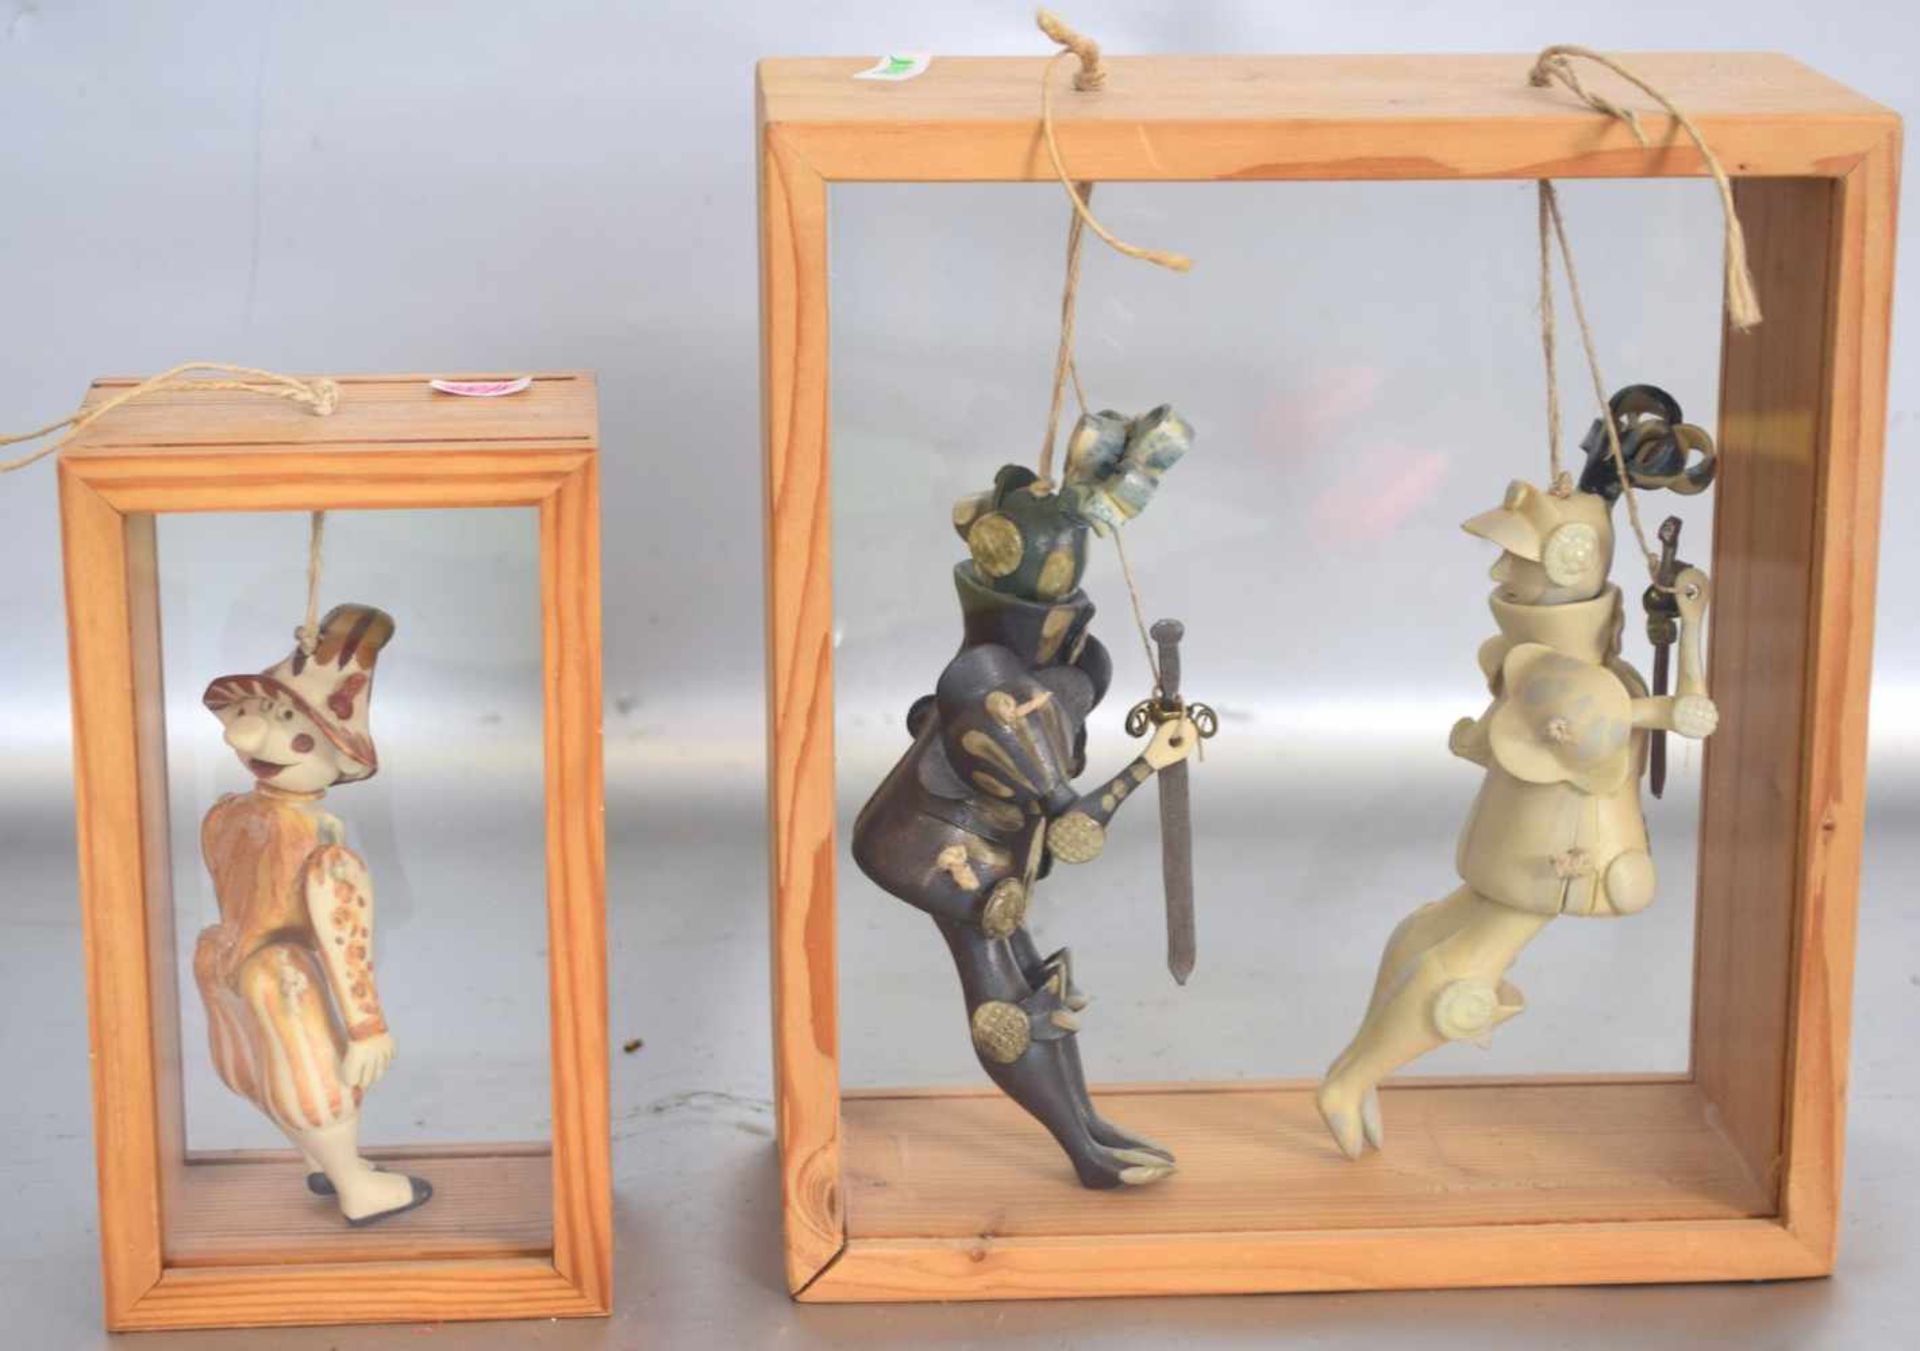 Drei Marionettenim verglasten Holzkasten, Ton, bunt bemalt, H 21 cm bzw. 16 cm